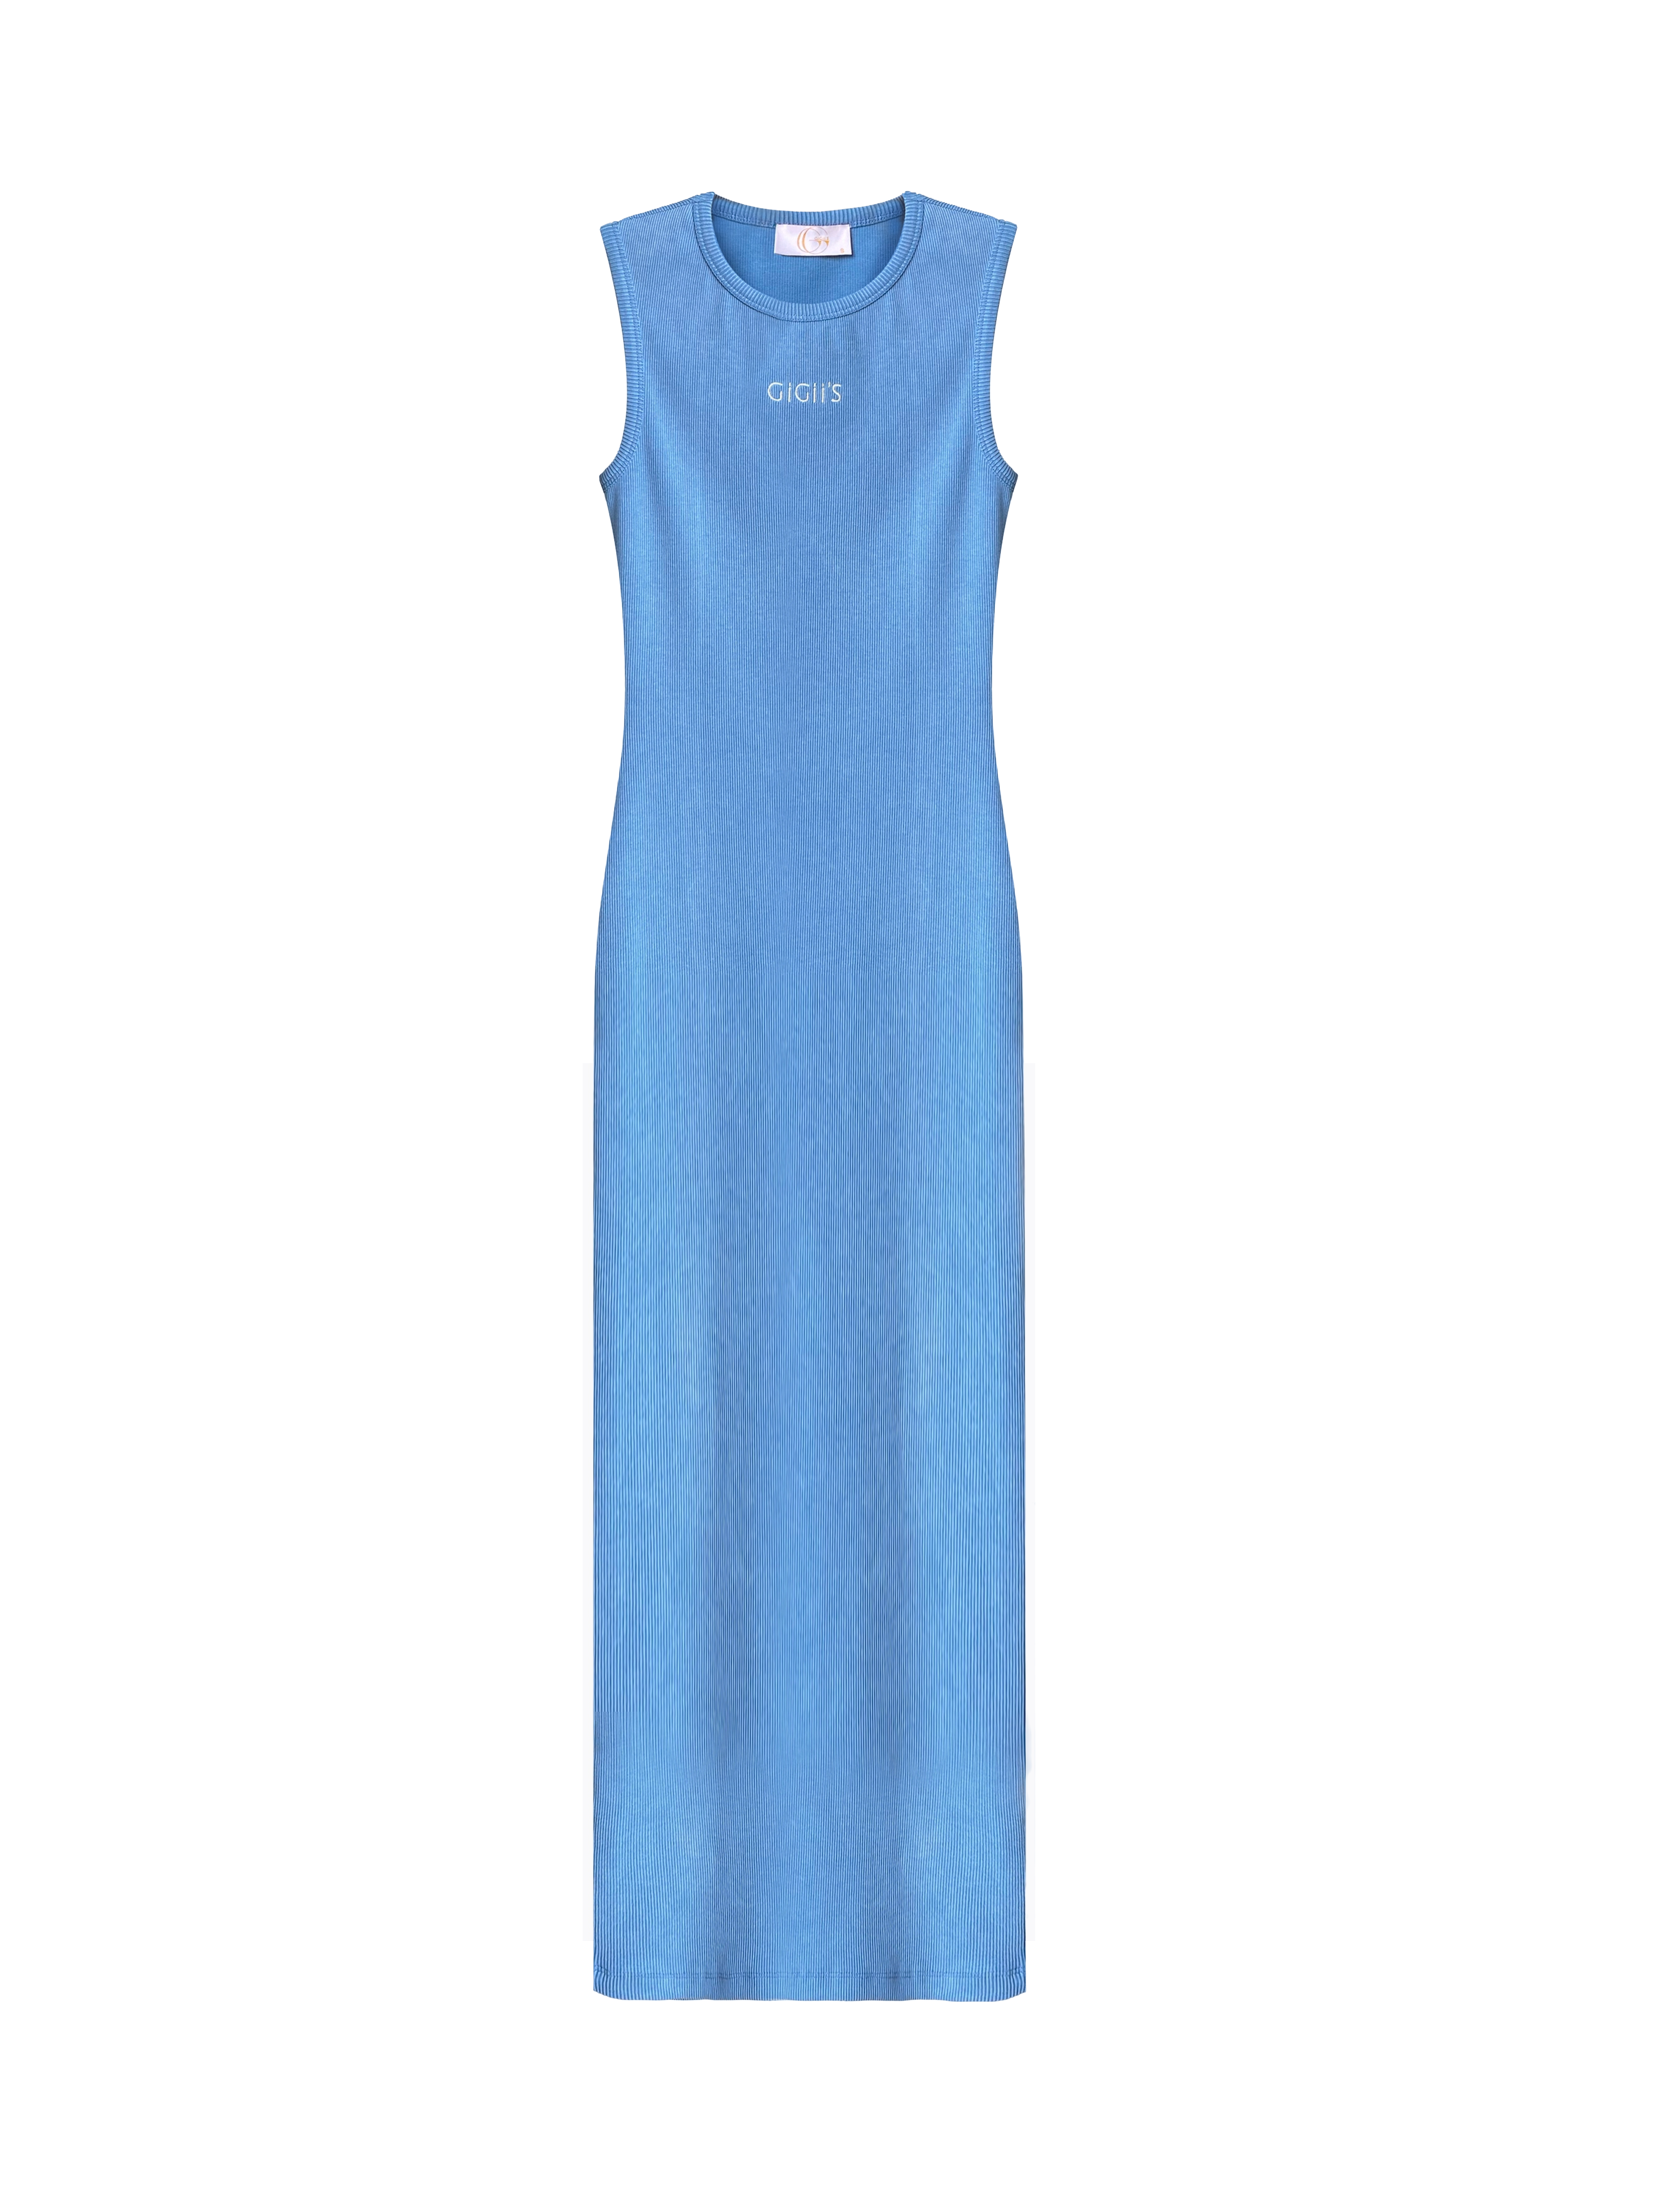 Gigii's Soho Midi Dress In Blue